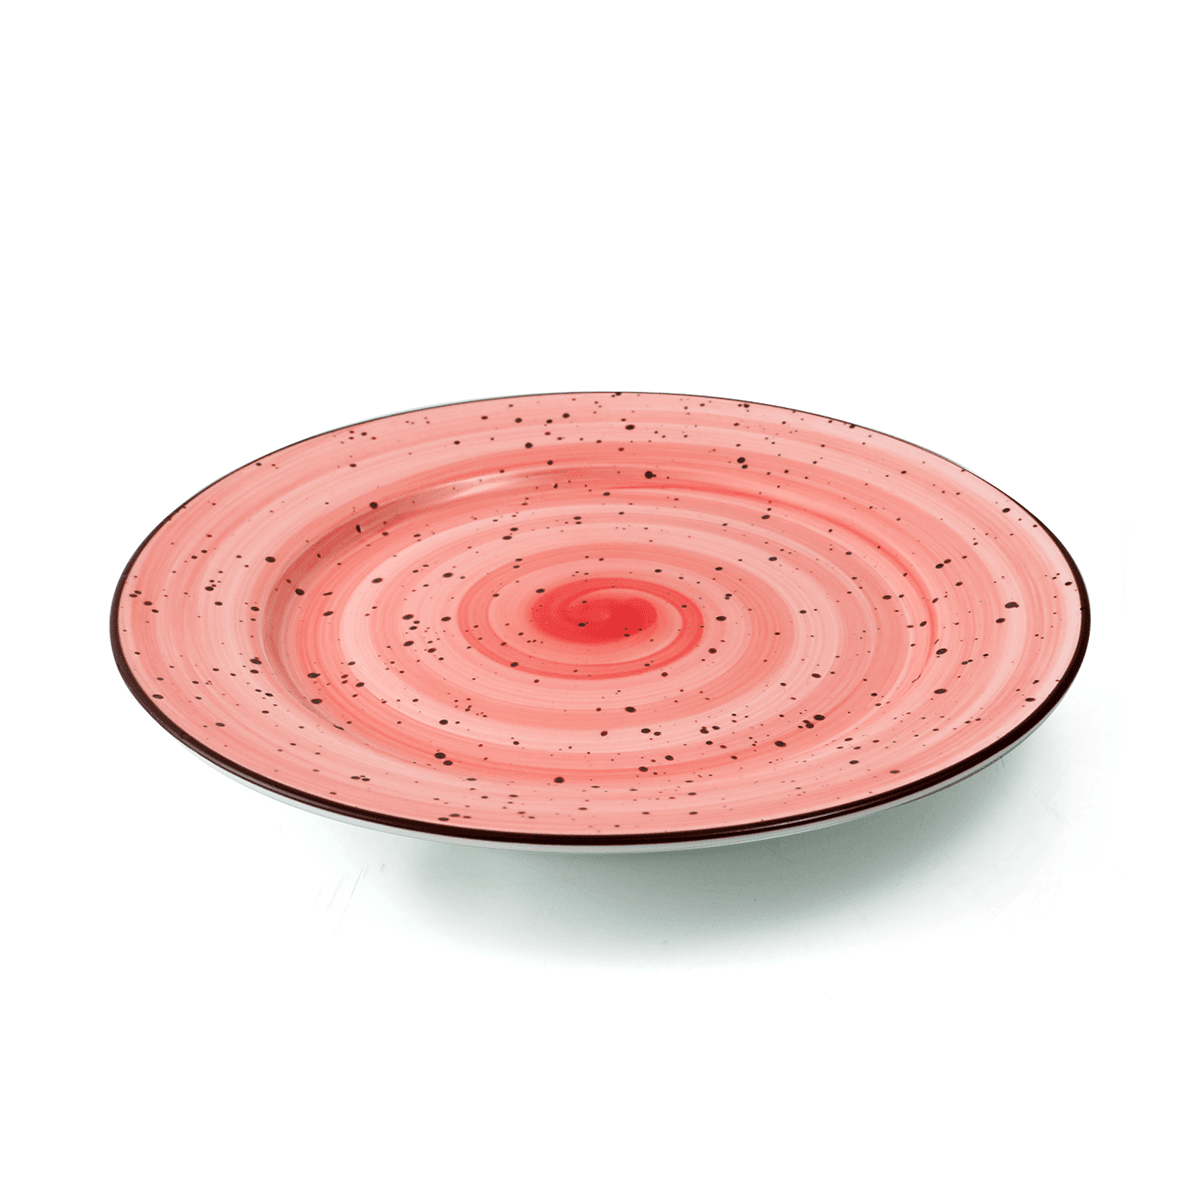 صحن تقديم مسطح بورسلان 11 بوصة أحمر بورسليتا Porceletta Glazed Porcelain Flat Plate